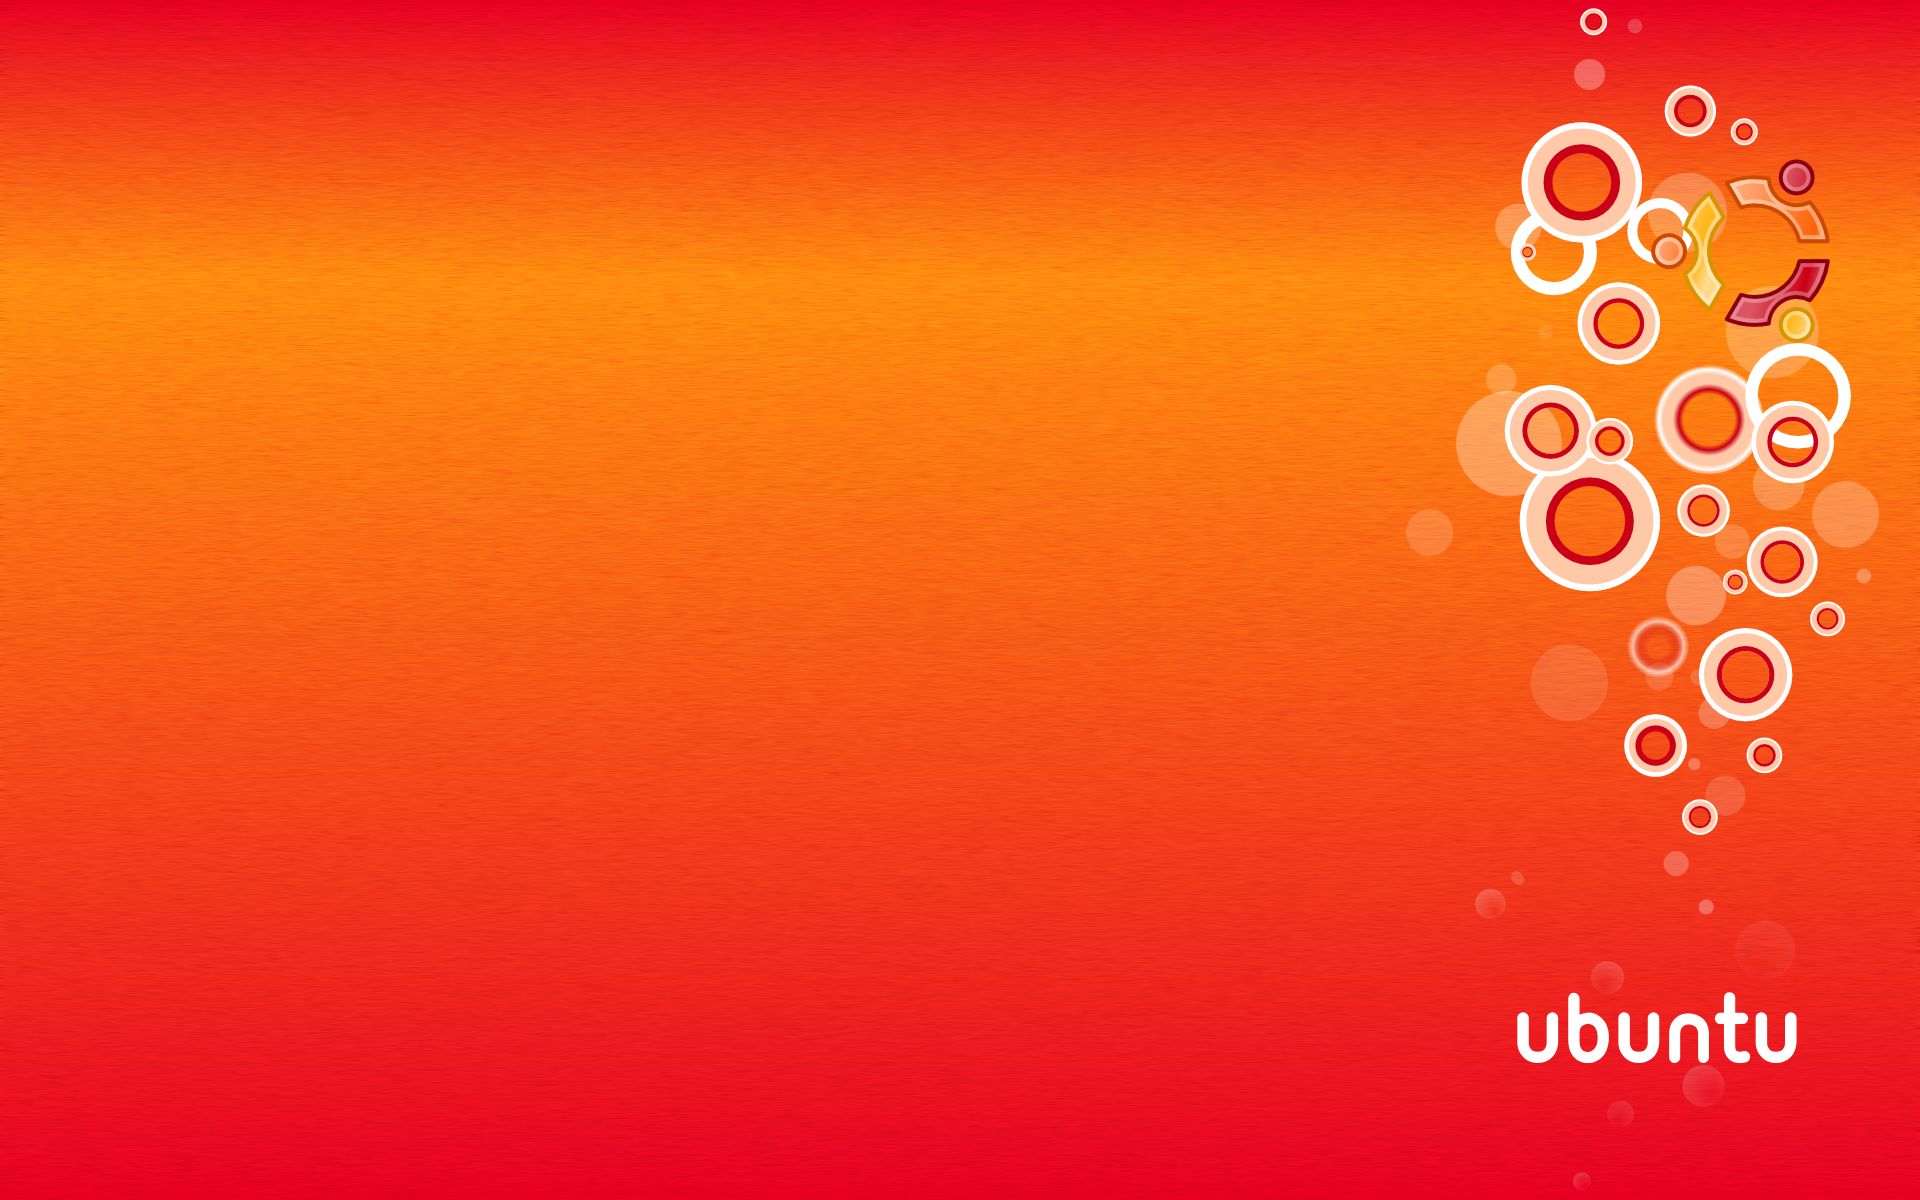 sfondo di ubuntu,rosso,arancia,giallo,cielo,pesca